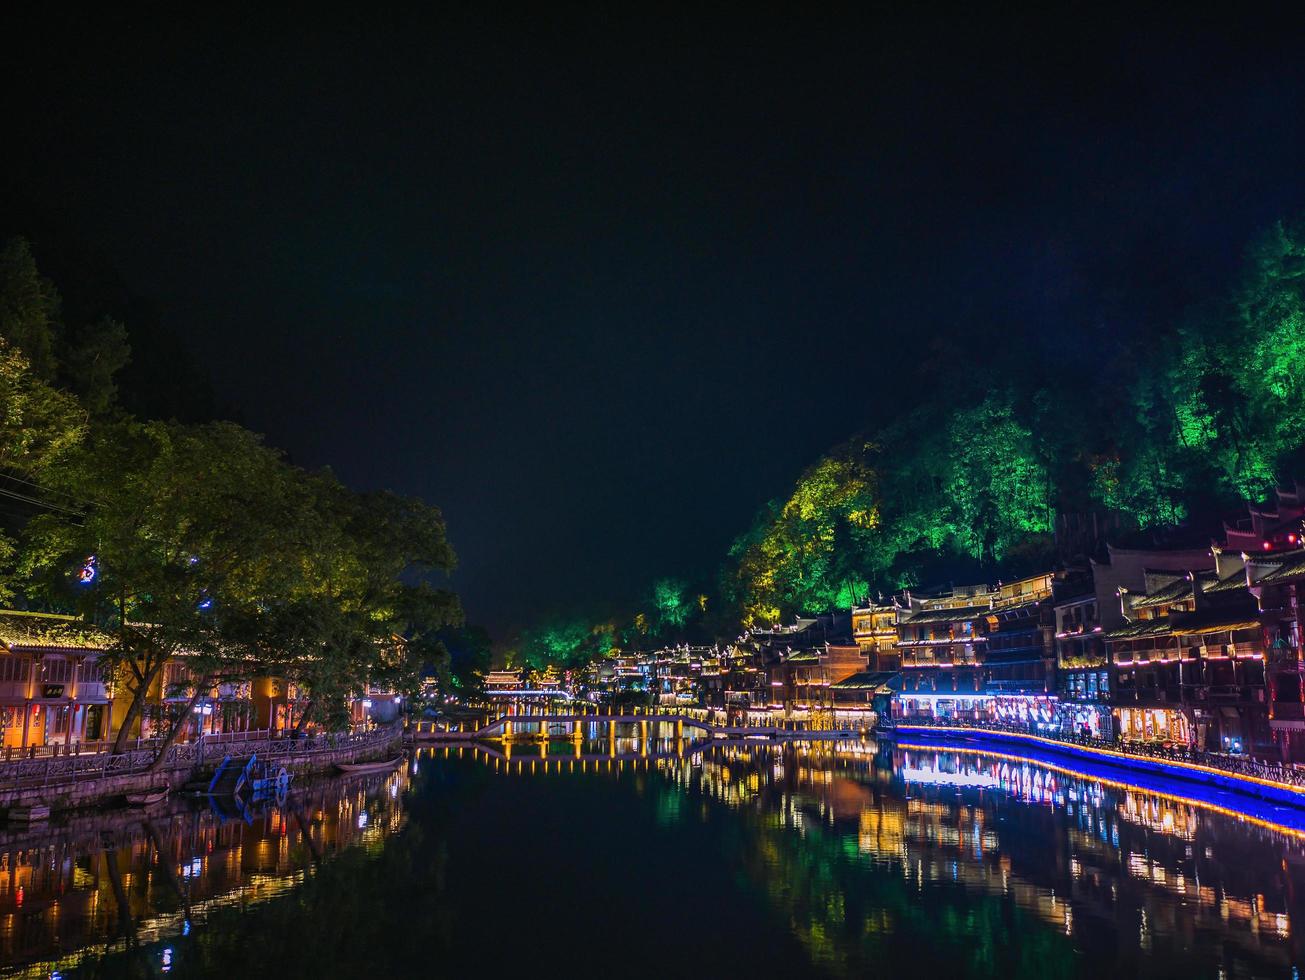 vista del paisaje en la noche del casco antiguo de fenghuang. la ciudad antigua de phoenix o el condado de fenghuang es un condado de la provincia de hunan, china foto